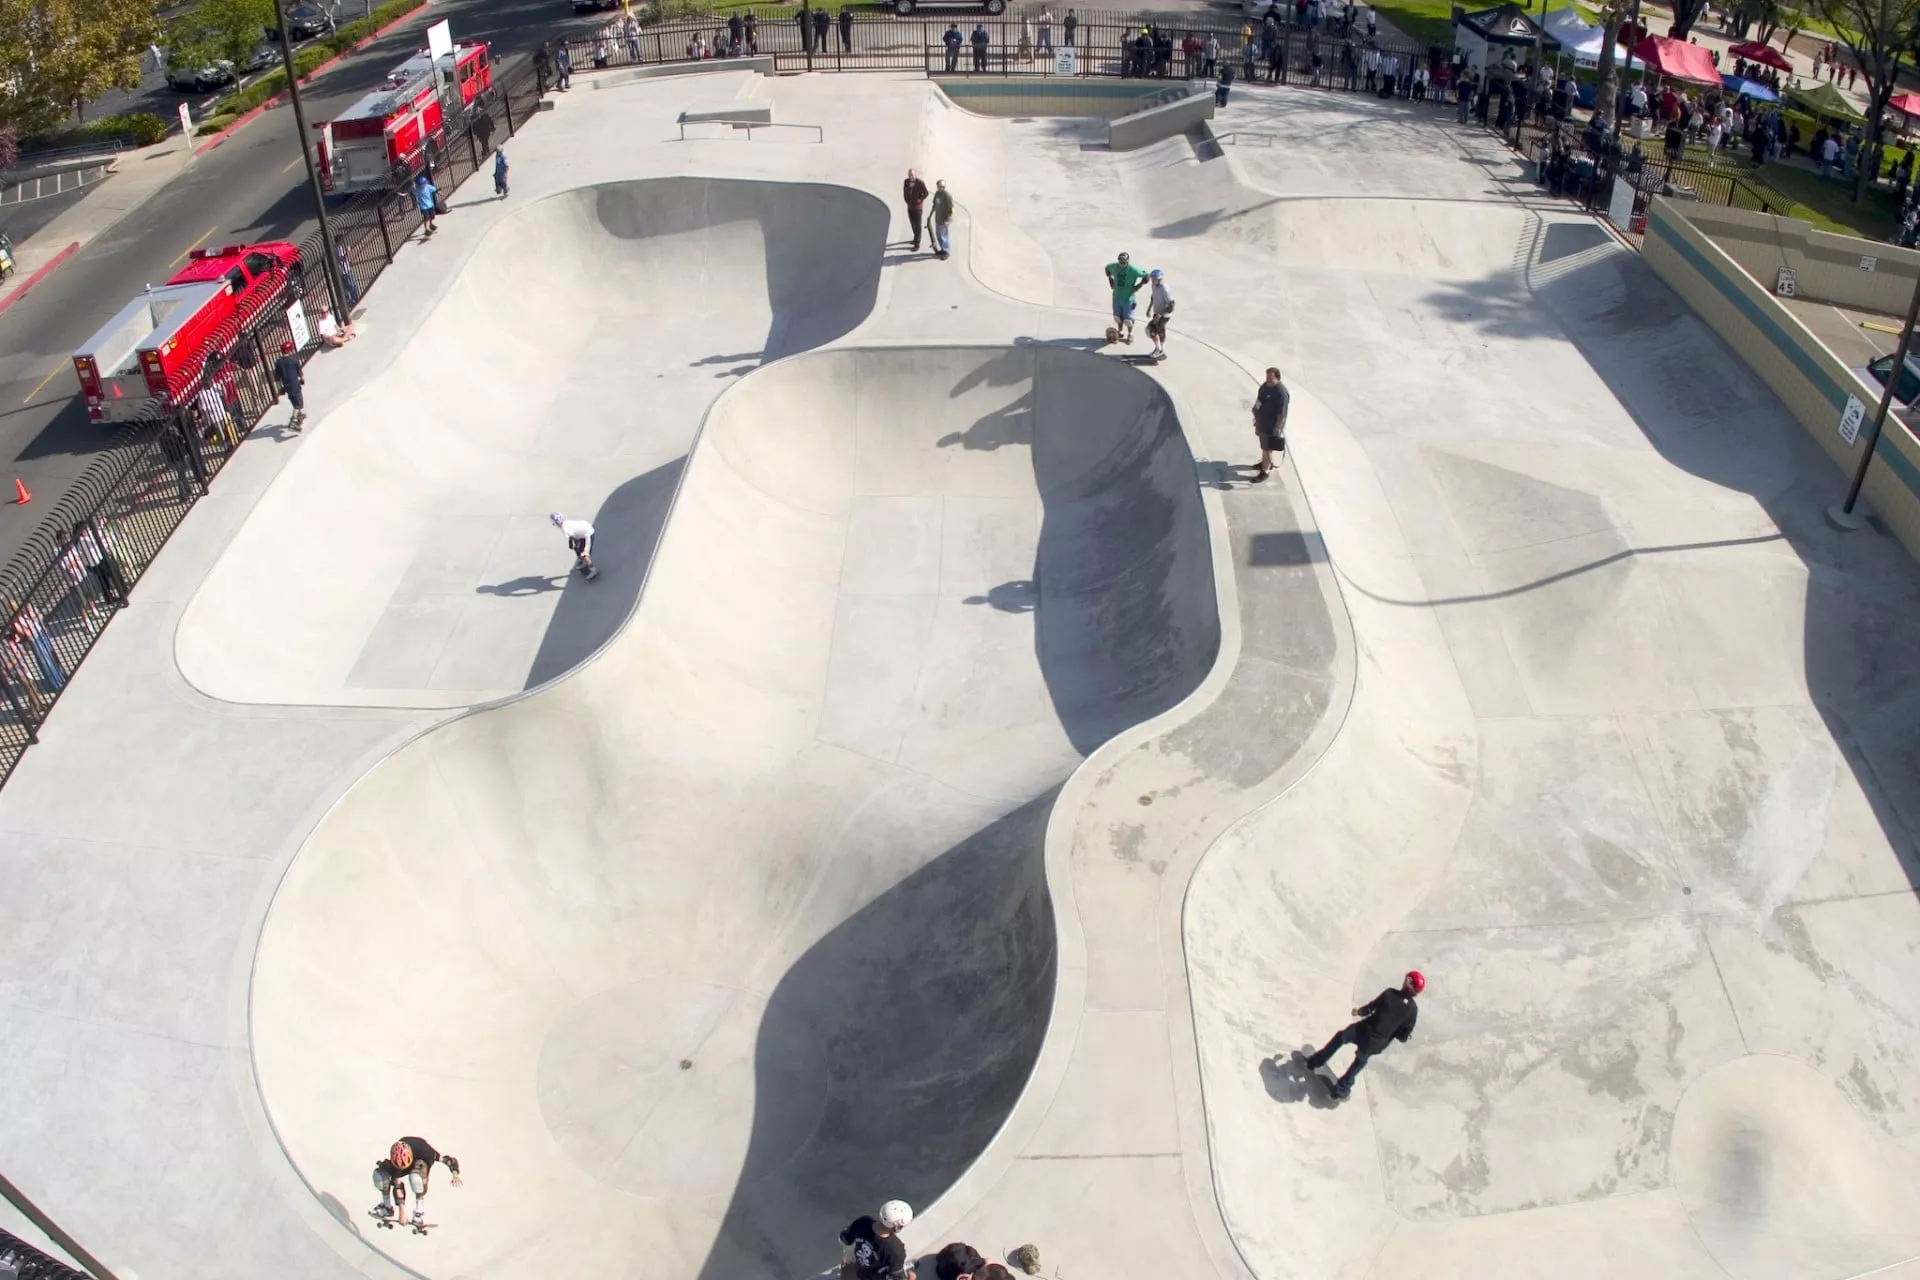 Plainpalais Skatepark in Switzerland, Europe | Skateboarding - Rated 4